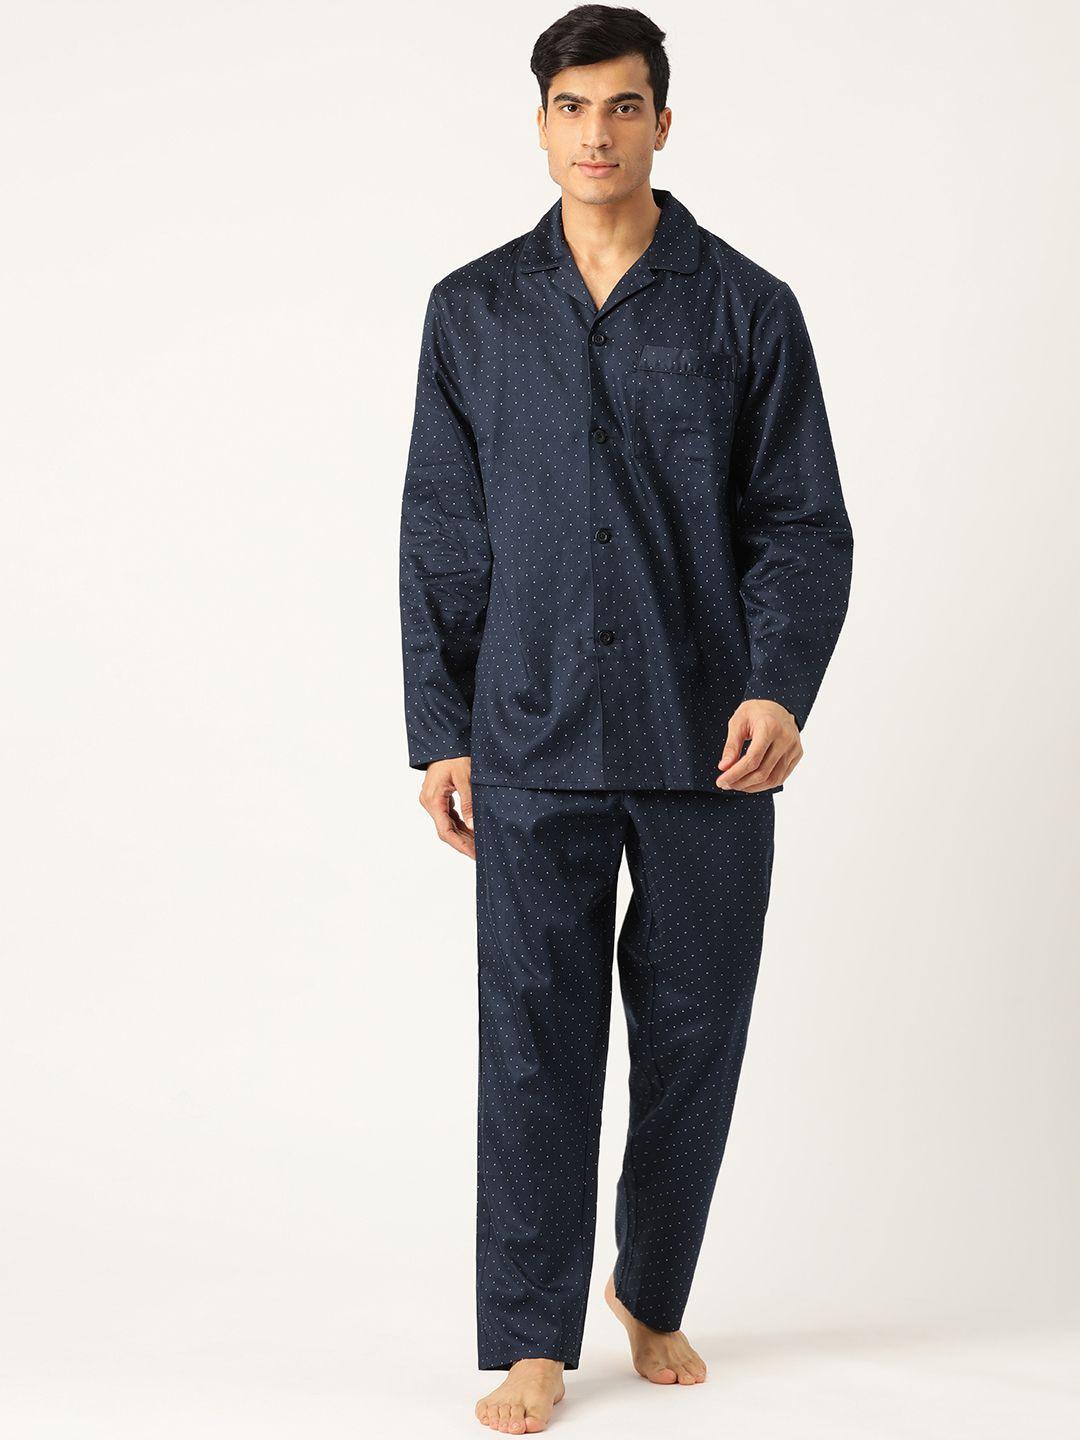 marks & spencer men navy blue & white printed night suit